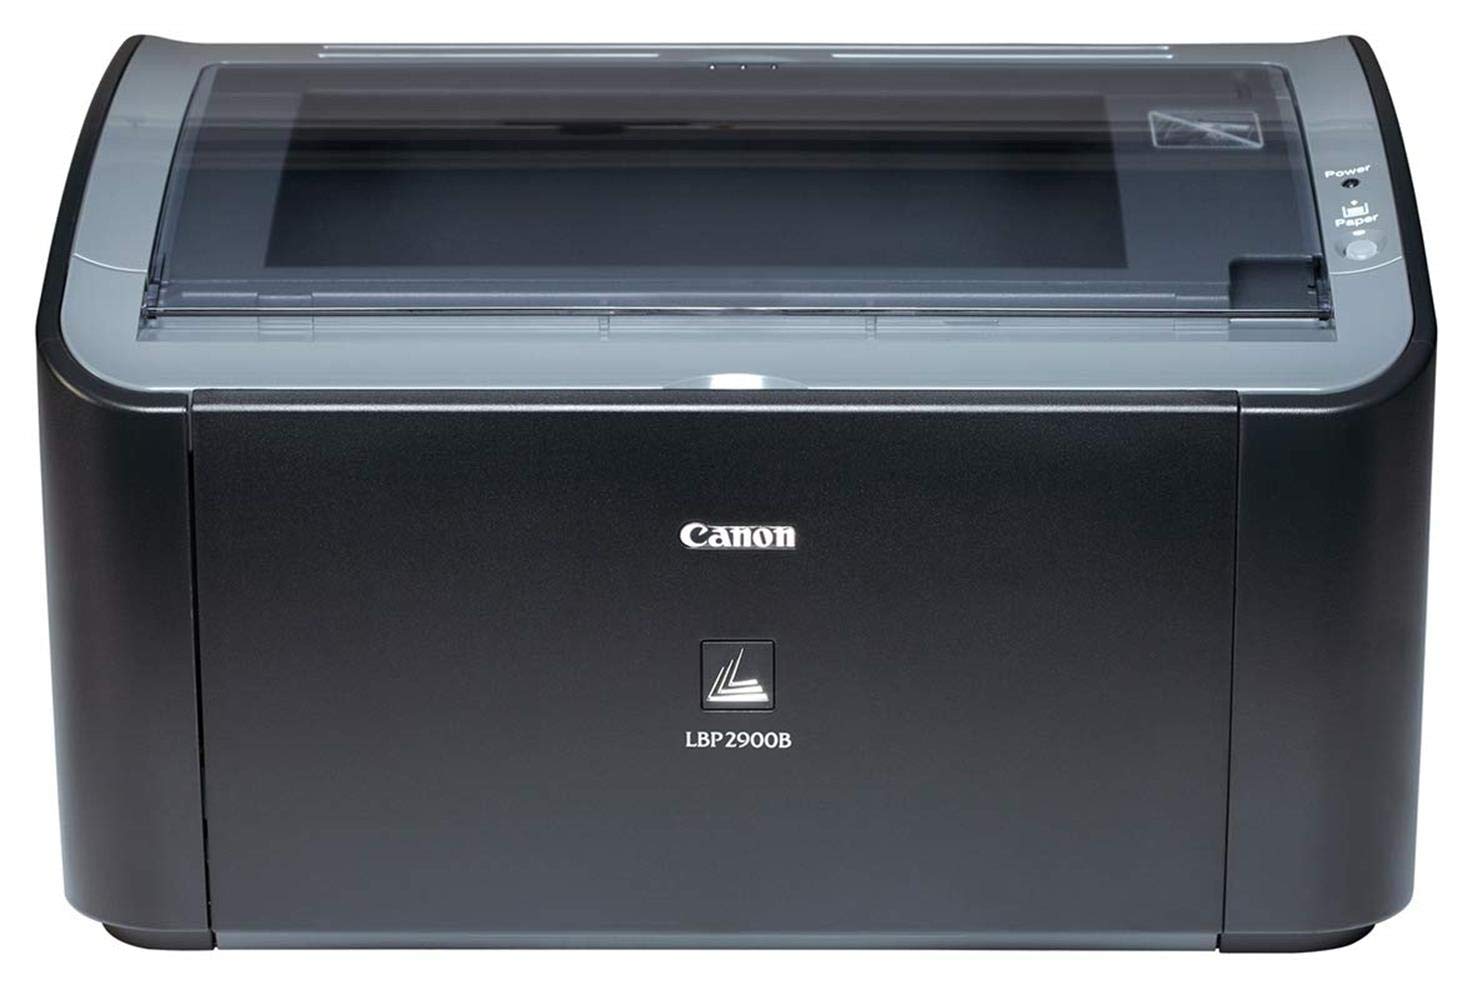 Canon imageCLASS LBP2900B Single Function Laser Monochrome Printer (Black)